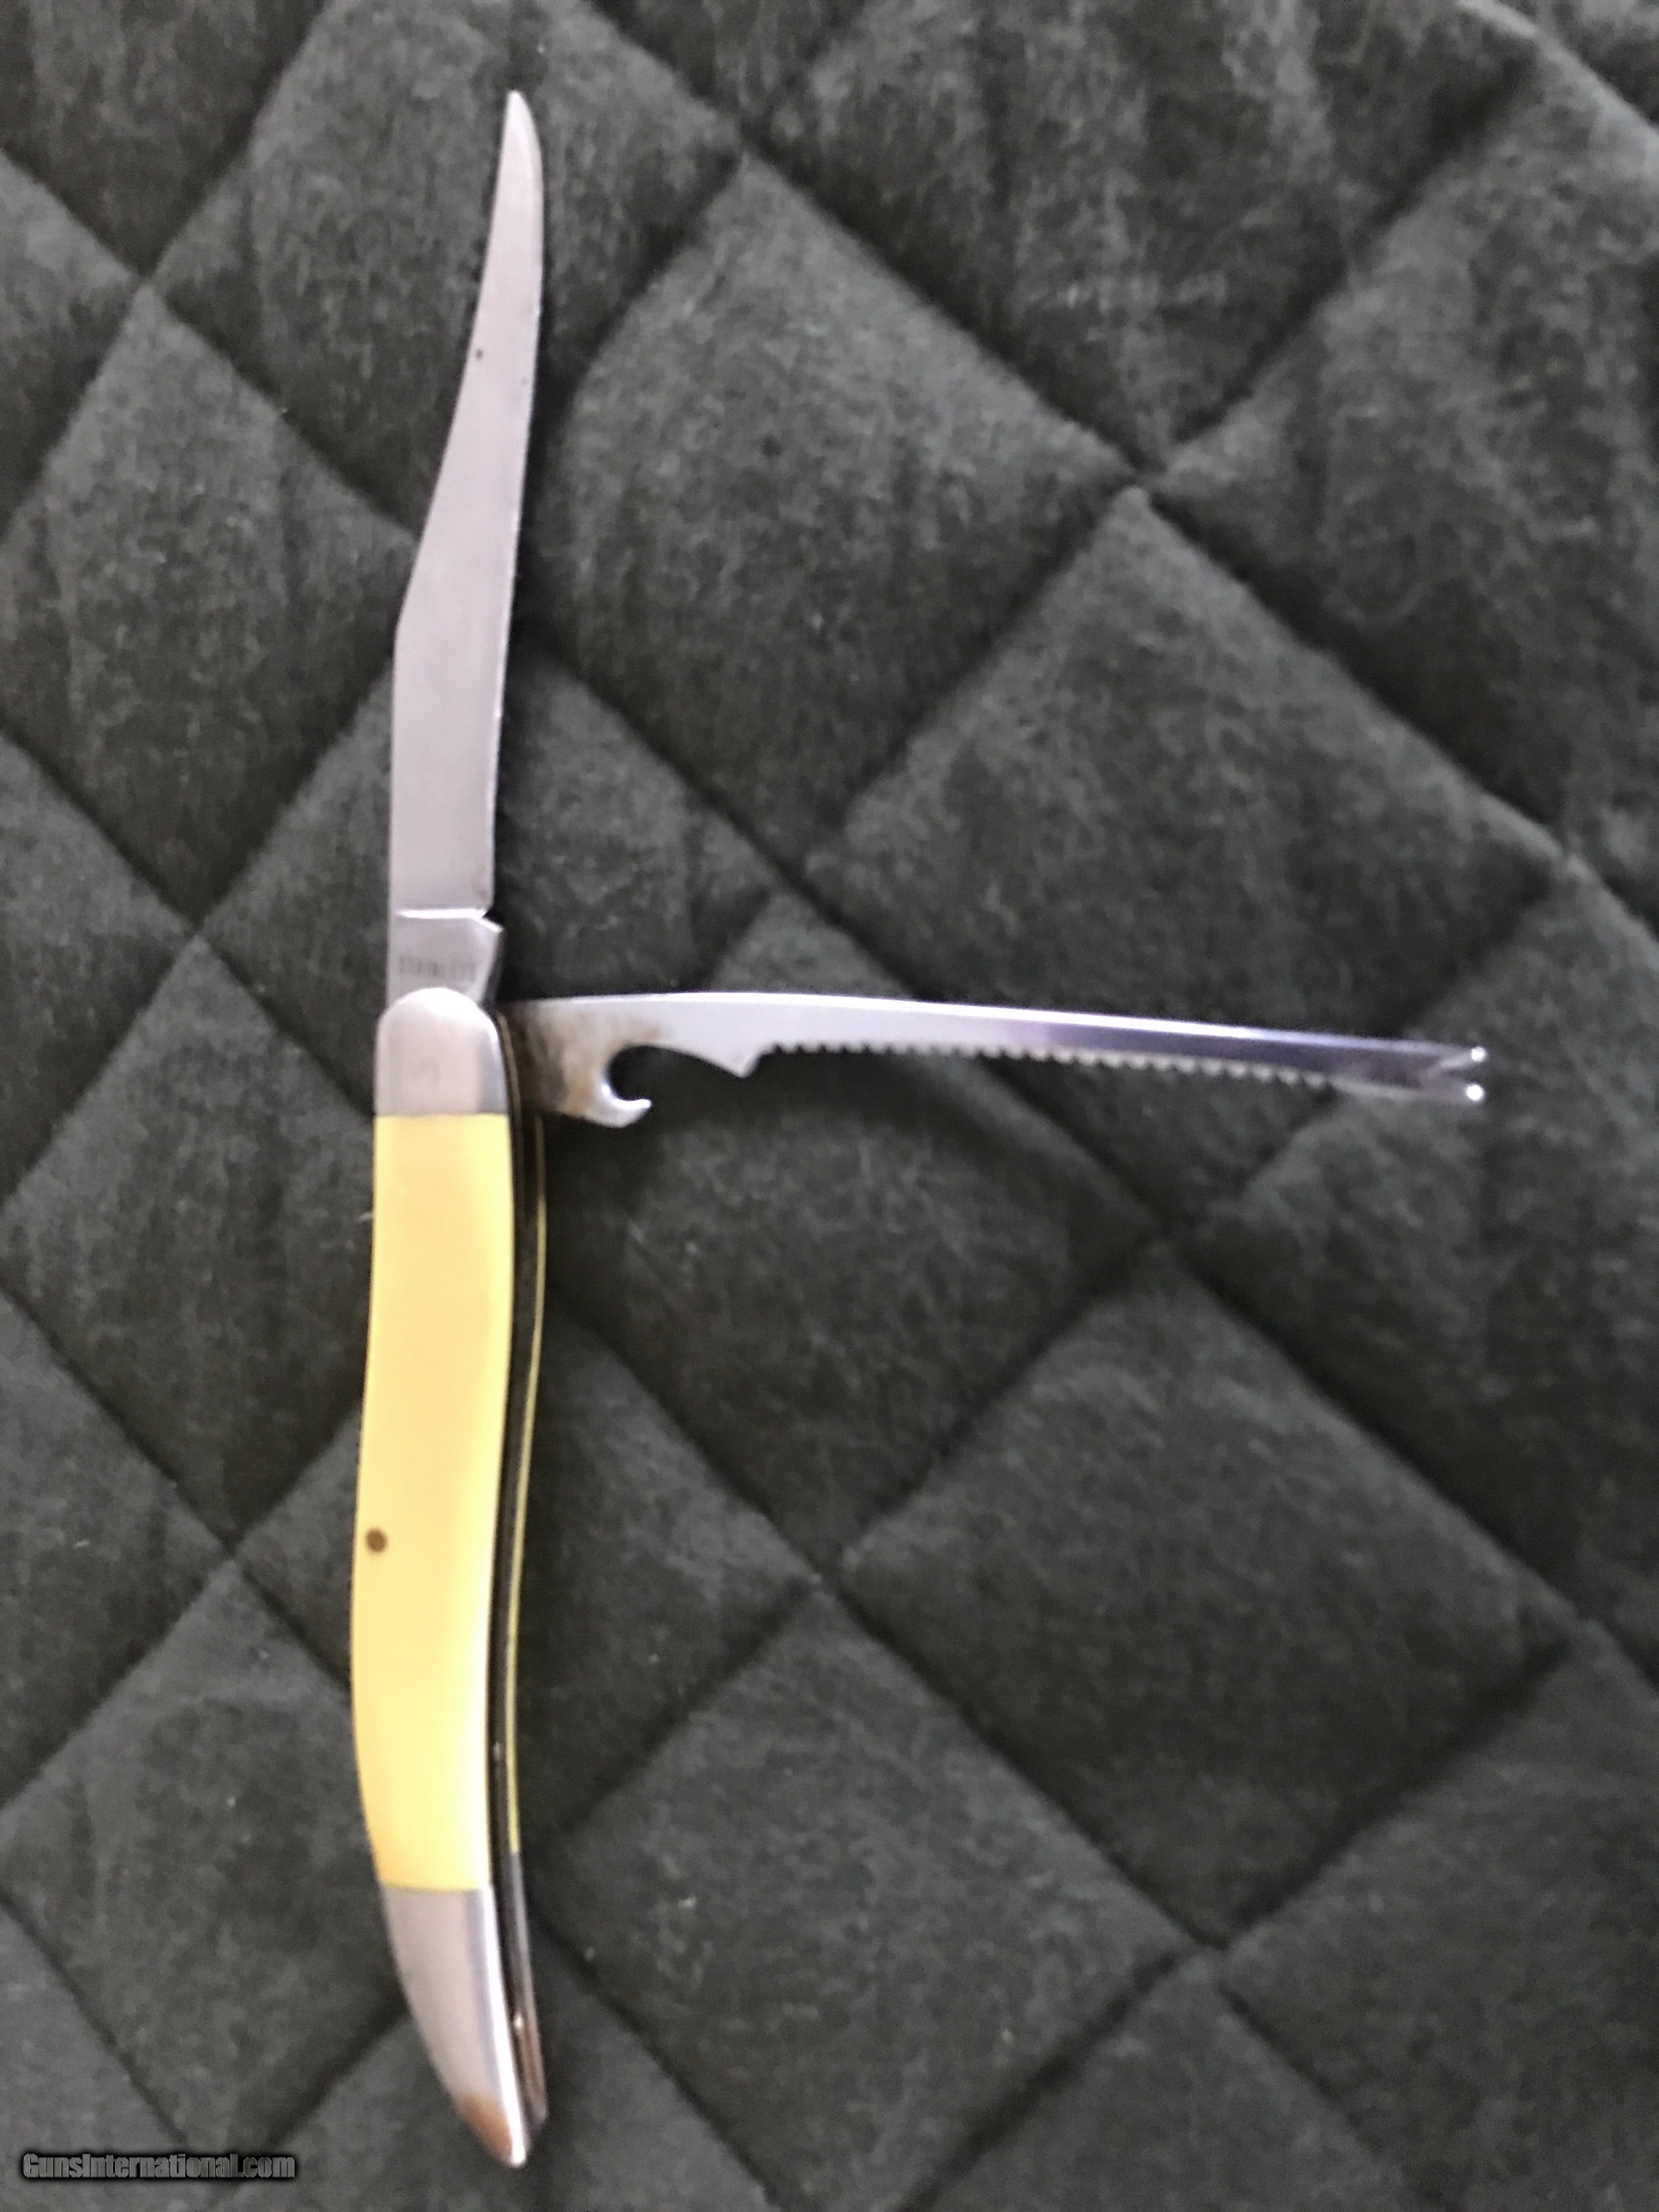 Kabar 1128 USA 2 blade fishing knife with hook sharpener